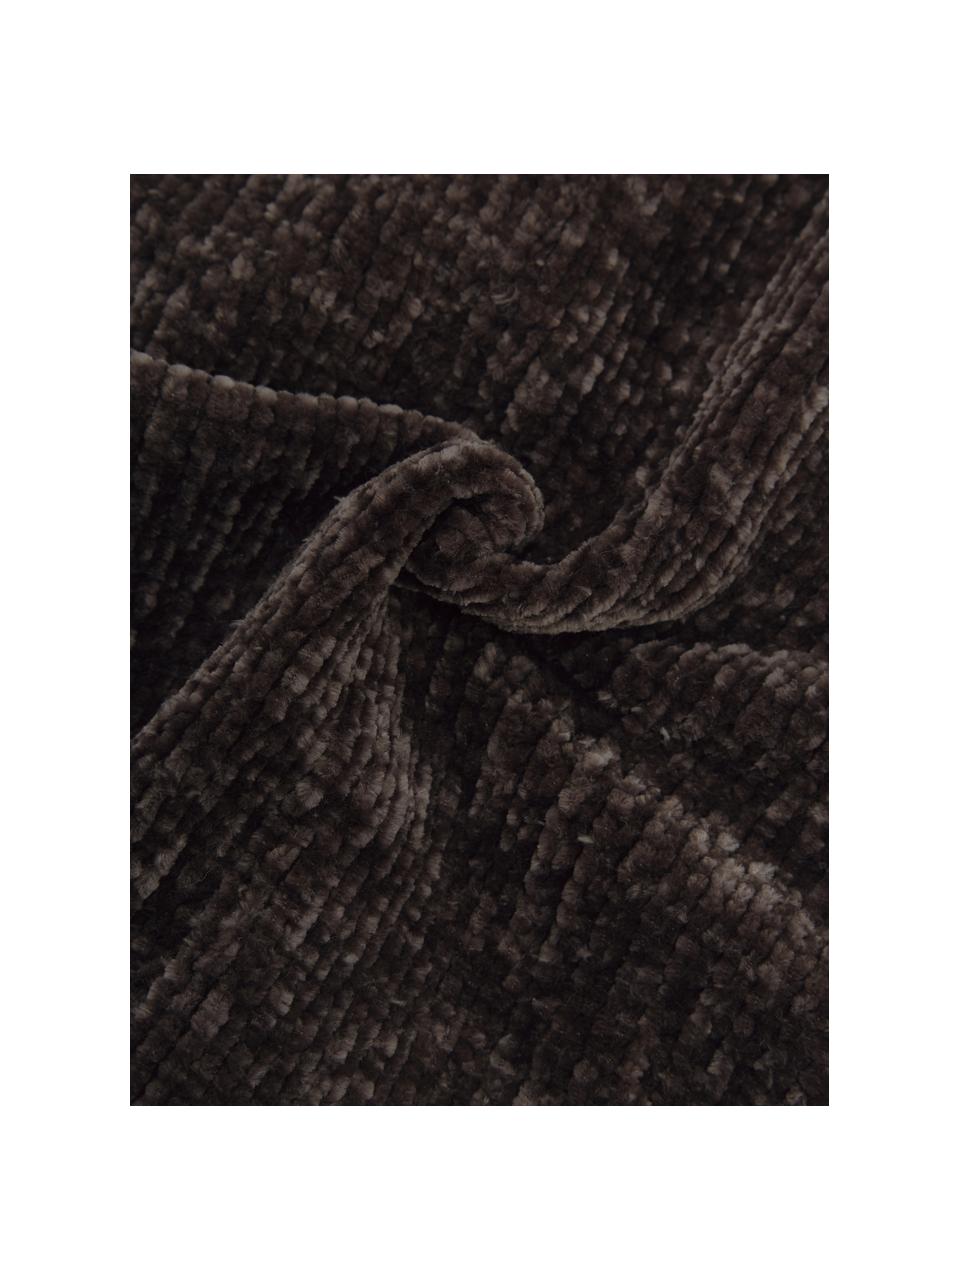 Zachte chenille kussenhoes Beckett in donkergrijs, 100% polyester, Donkergrijs, B 45 x L 45 cm